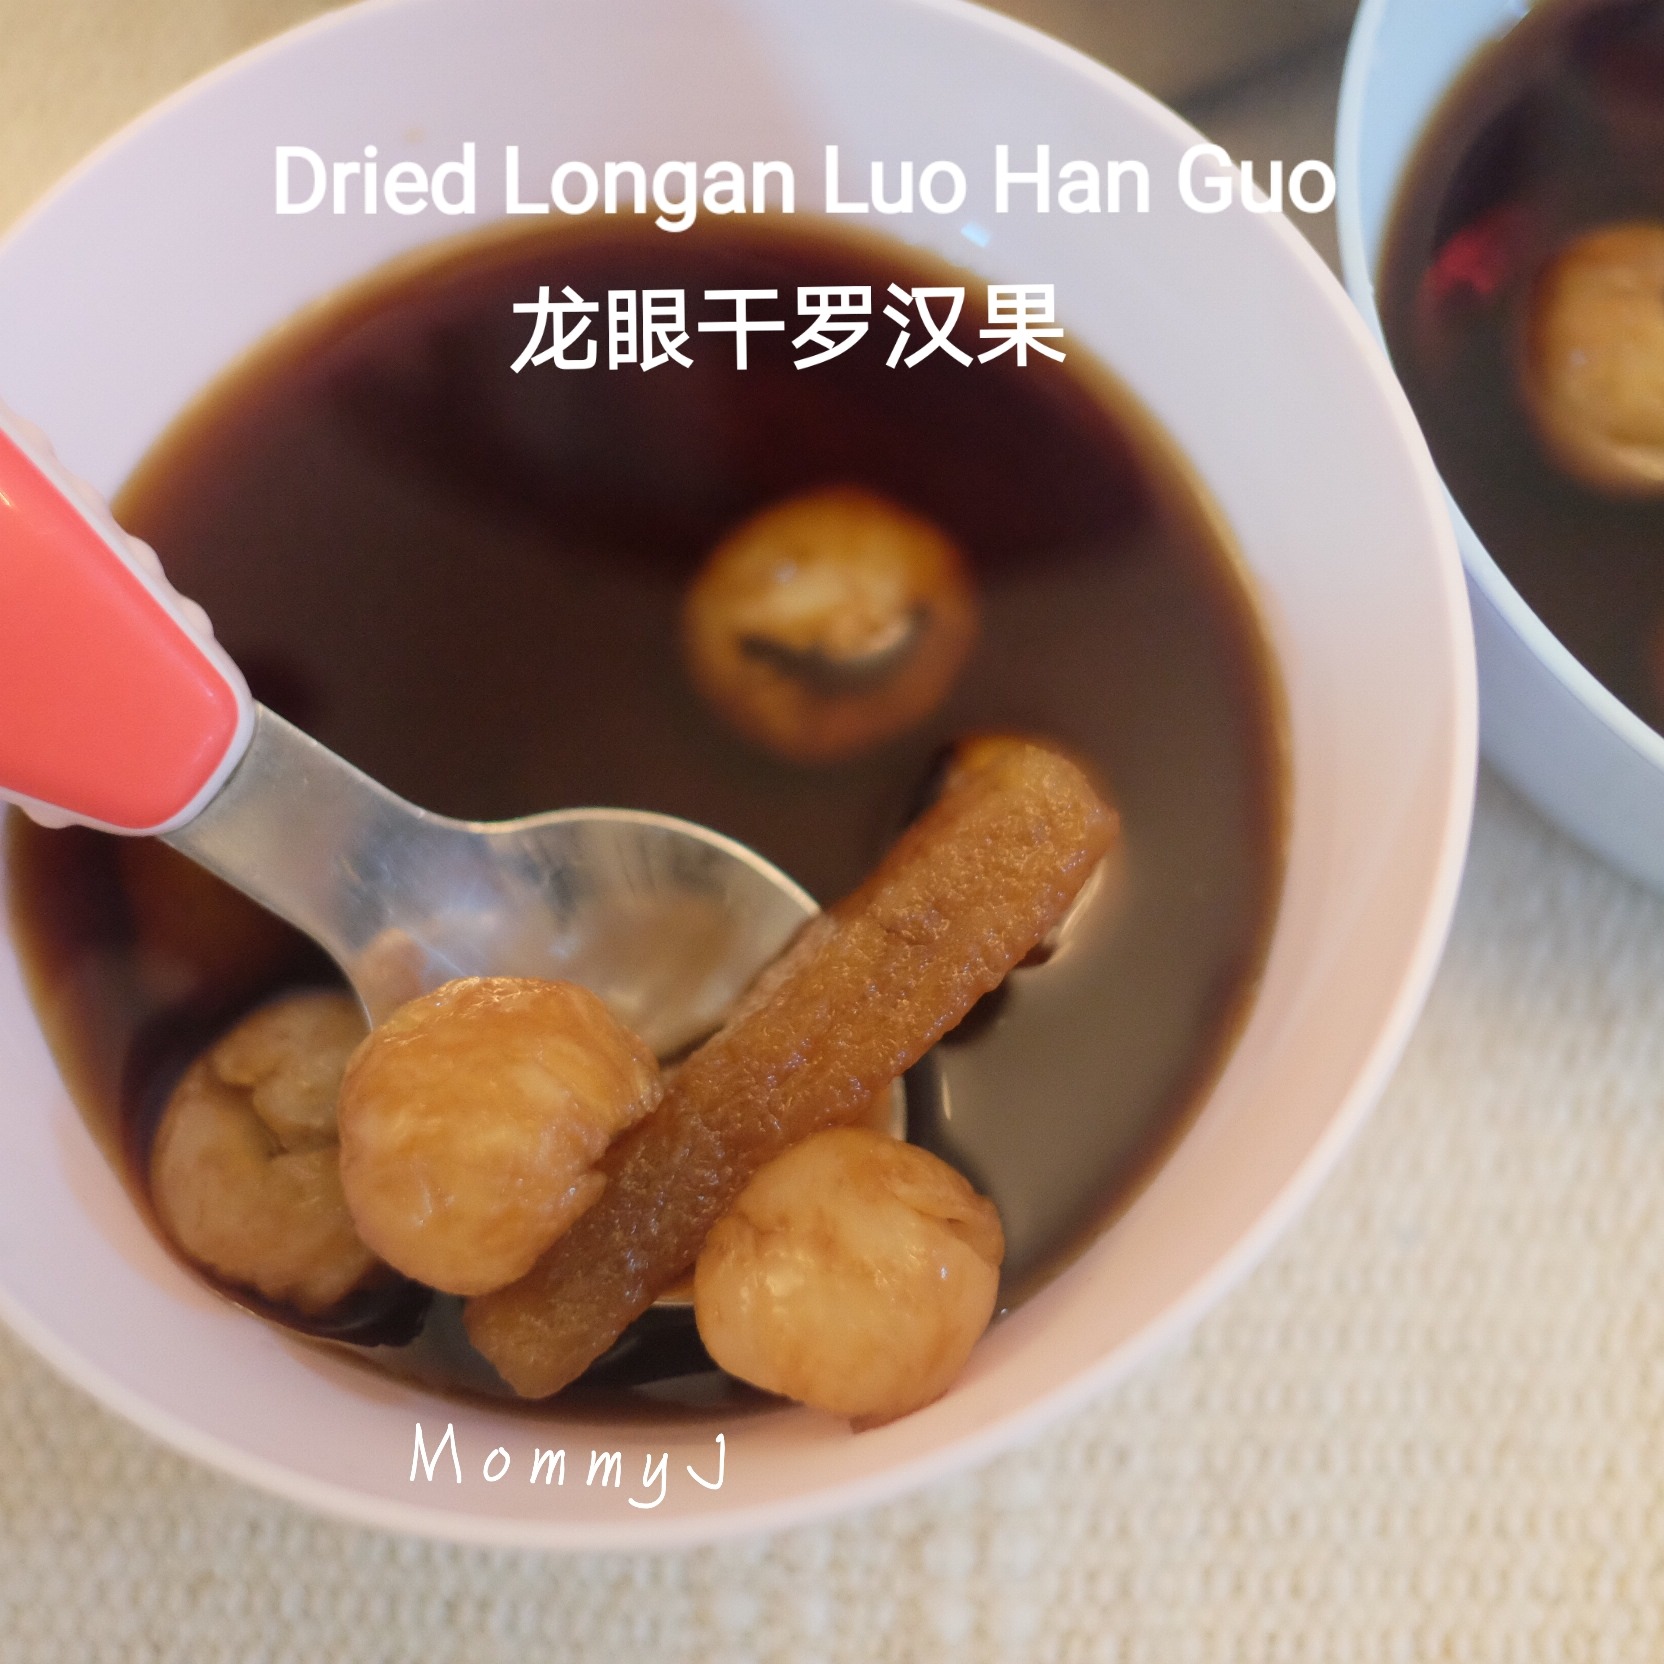 Dried Longan Luo Han Guo